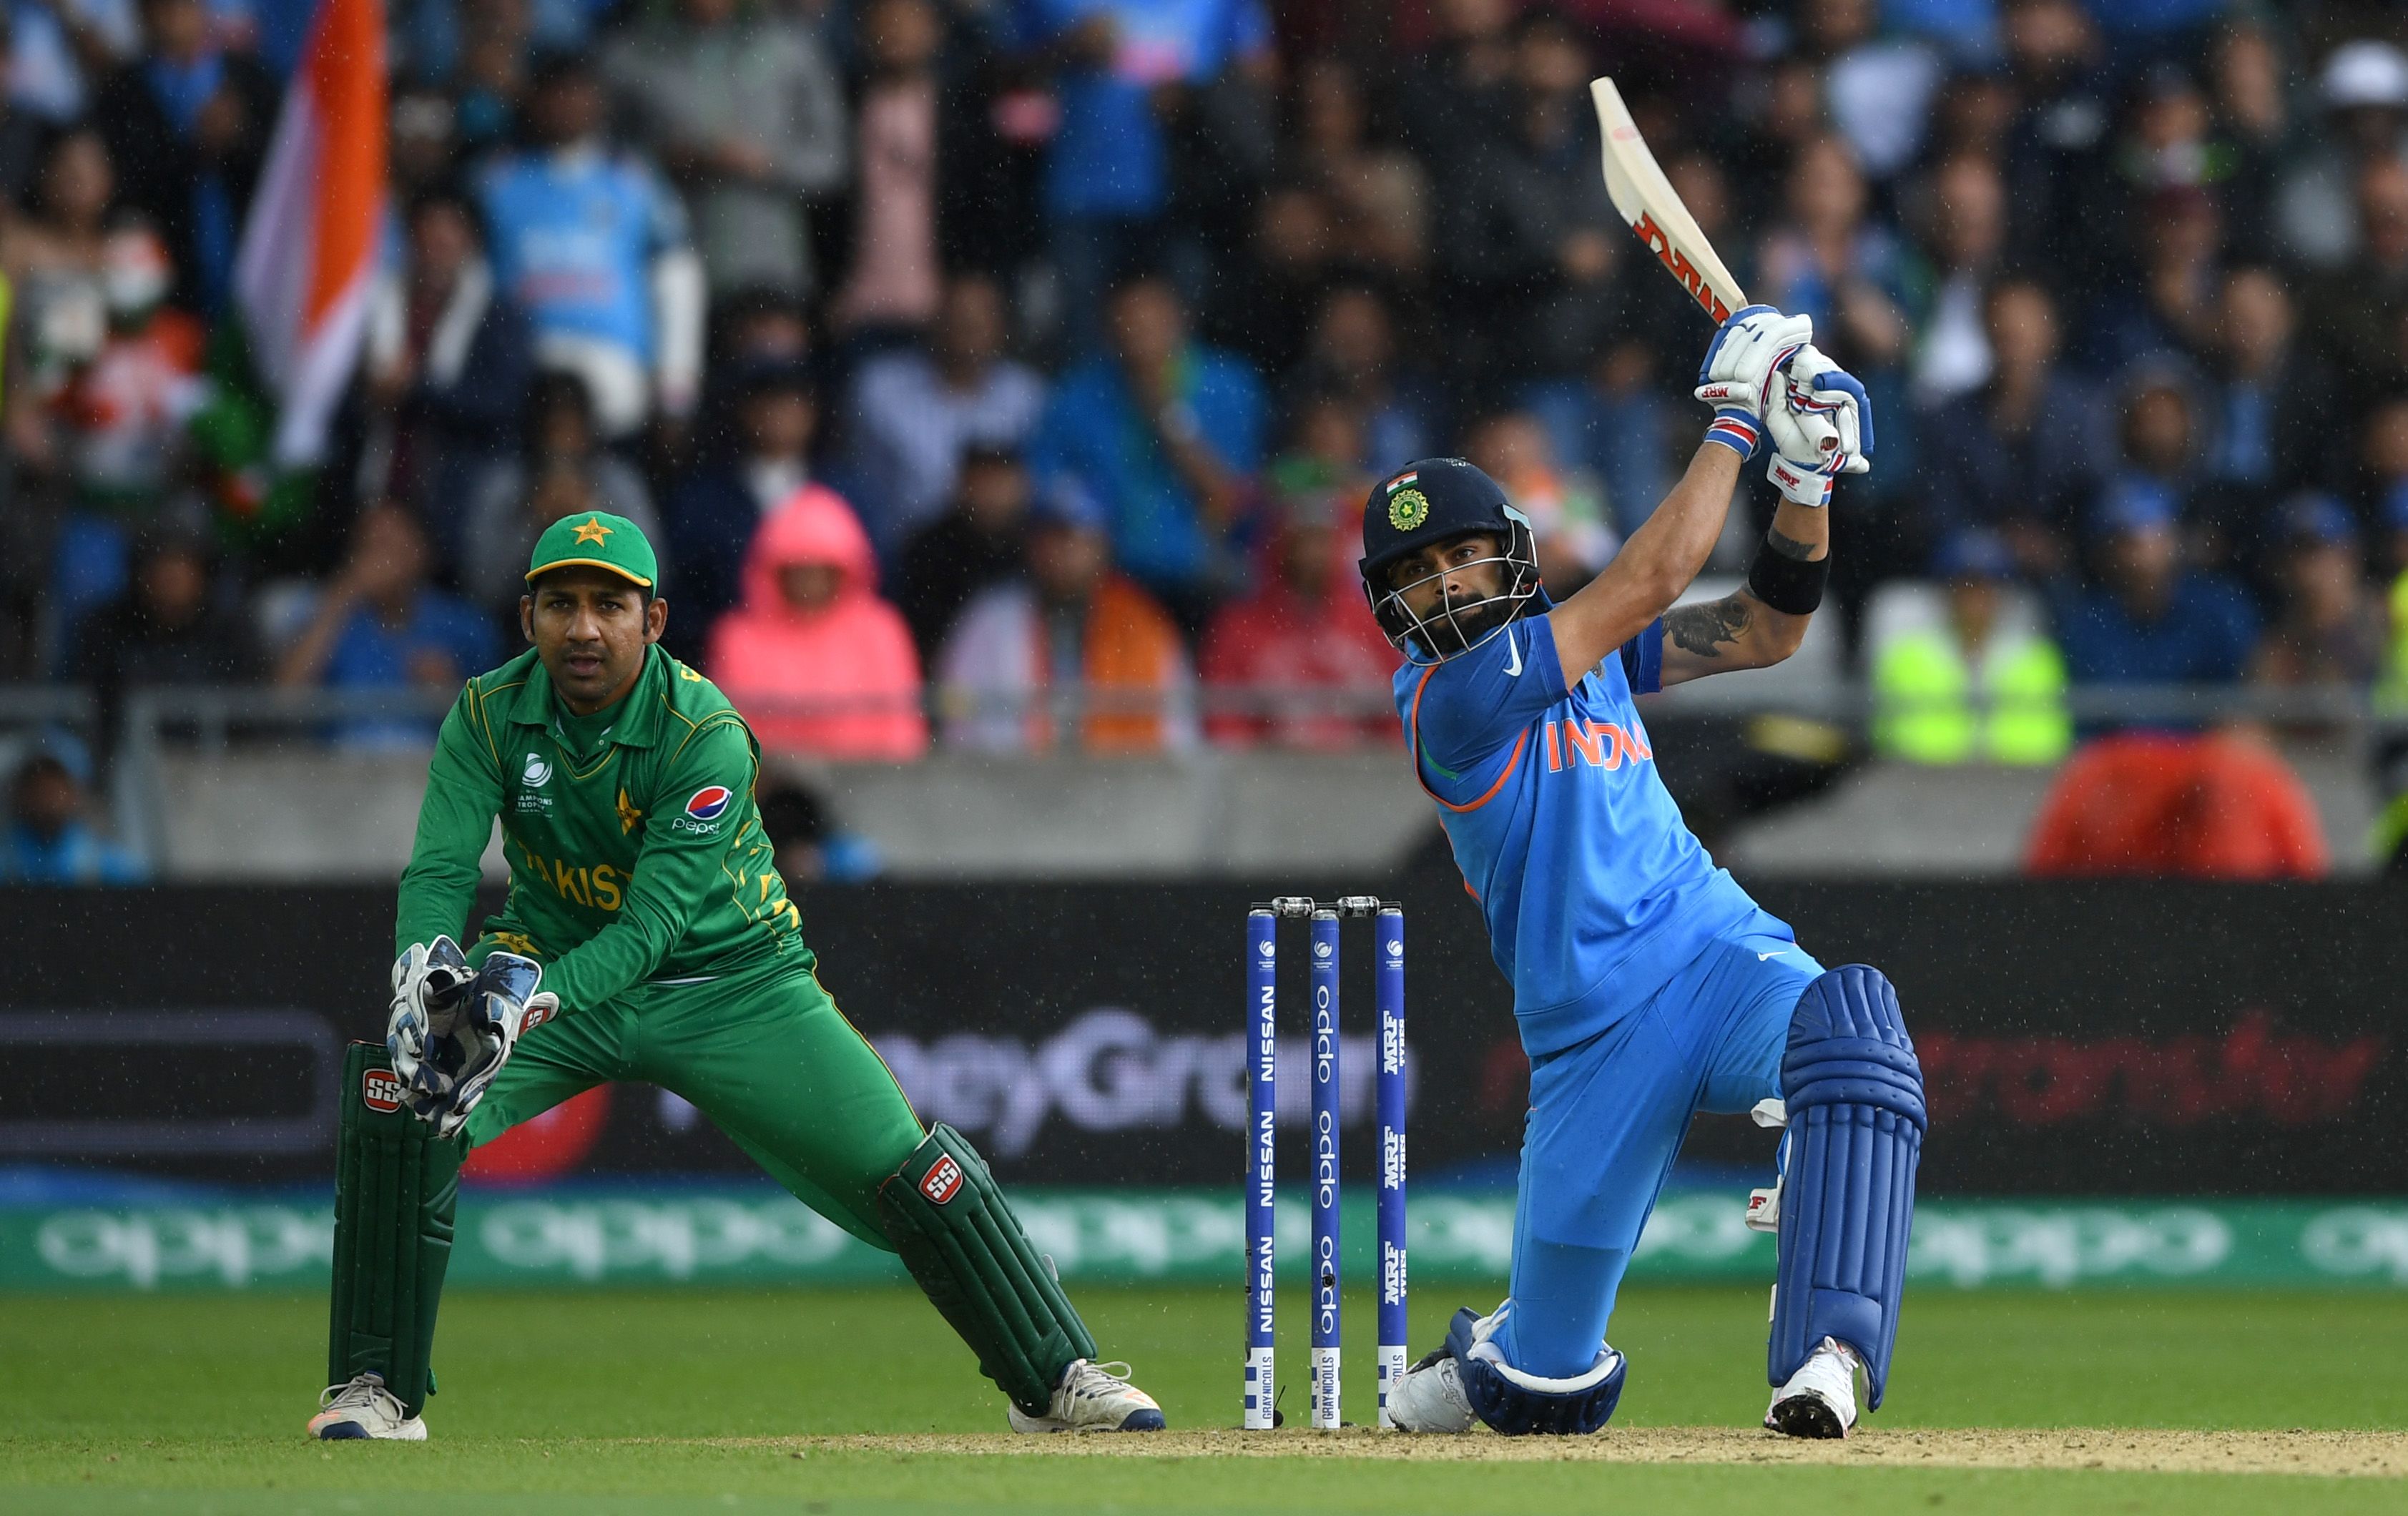 Live cricket match. Пакистан крикет. ICC Cricket World Cup 2015, India vs Pakistan. Индия спорт крикет. Крикет матч.